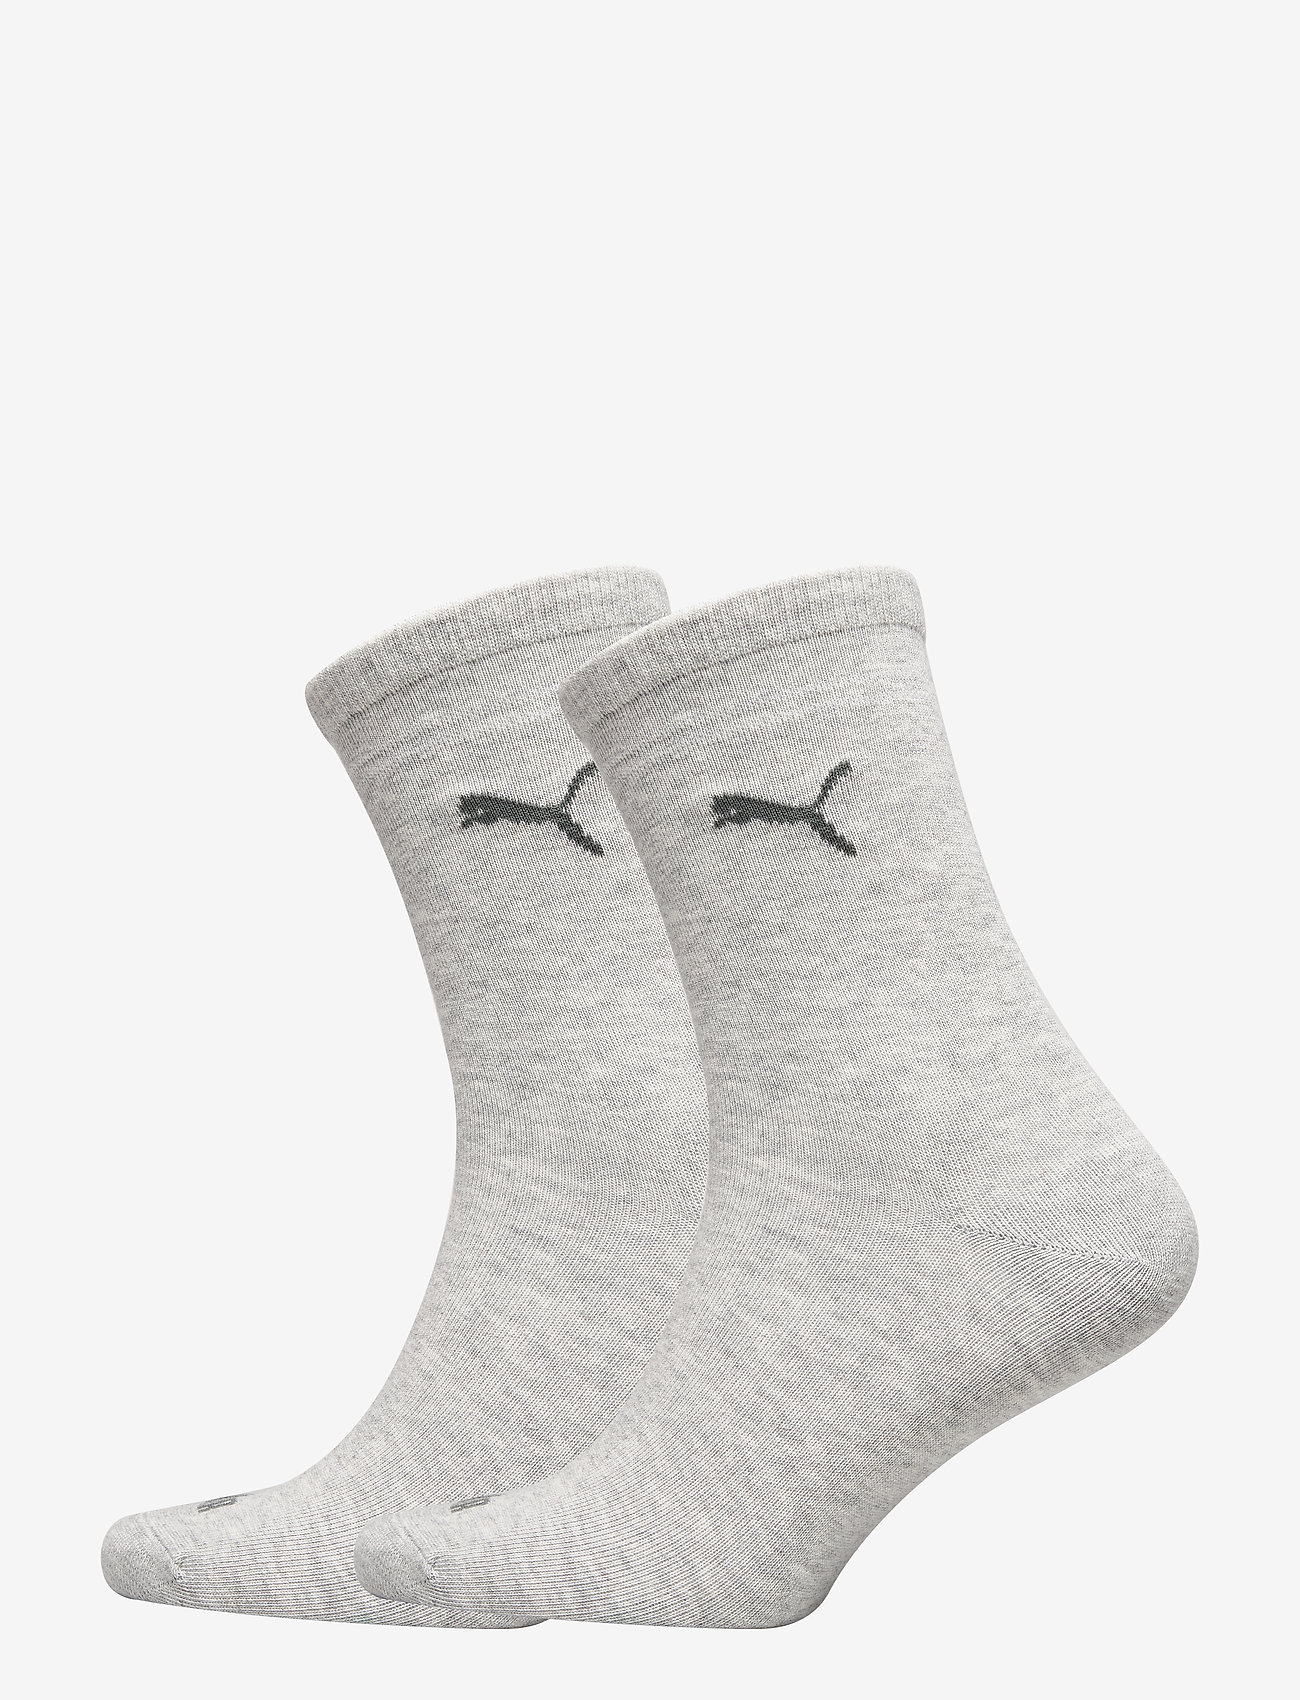 Puma Sock 2p Women (Grey Melange) (5.25 